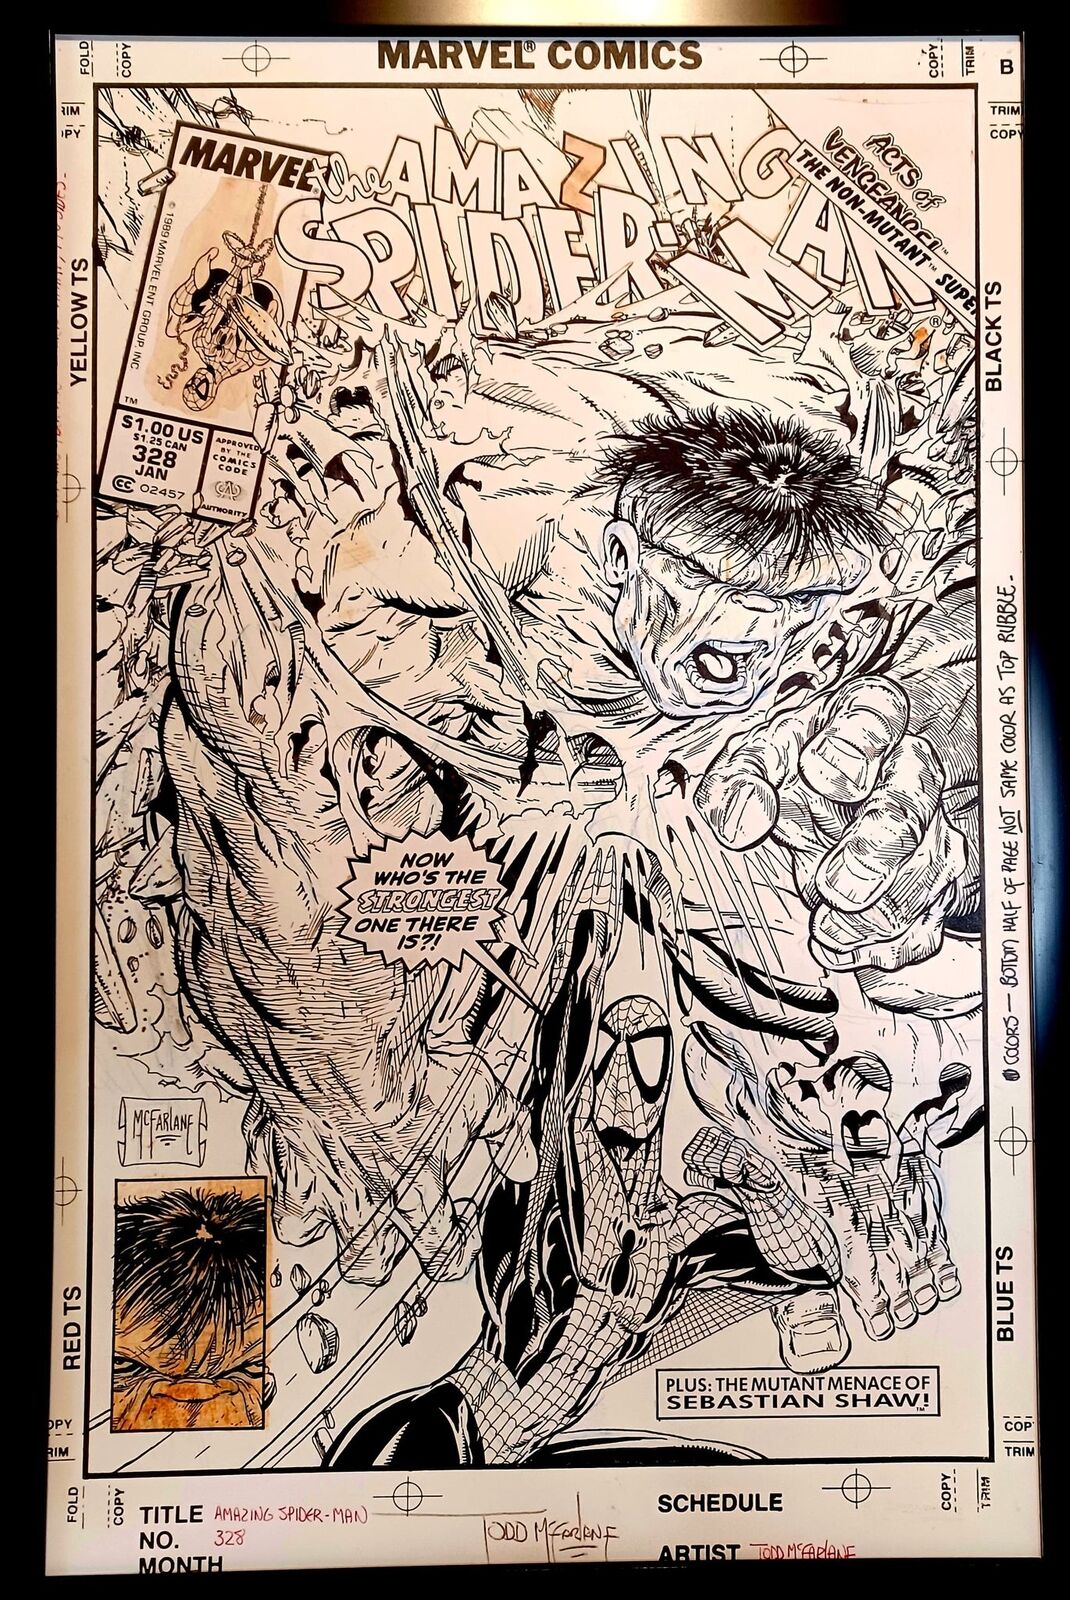 Amazing Spider-Man #328 by Todd McFarlane 11x17 FRAMED Original Art Print Comic 